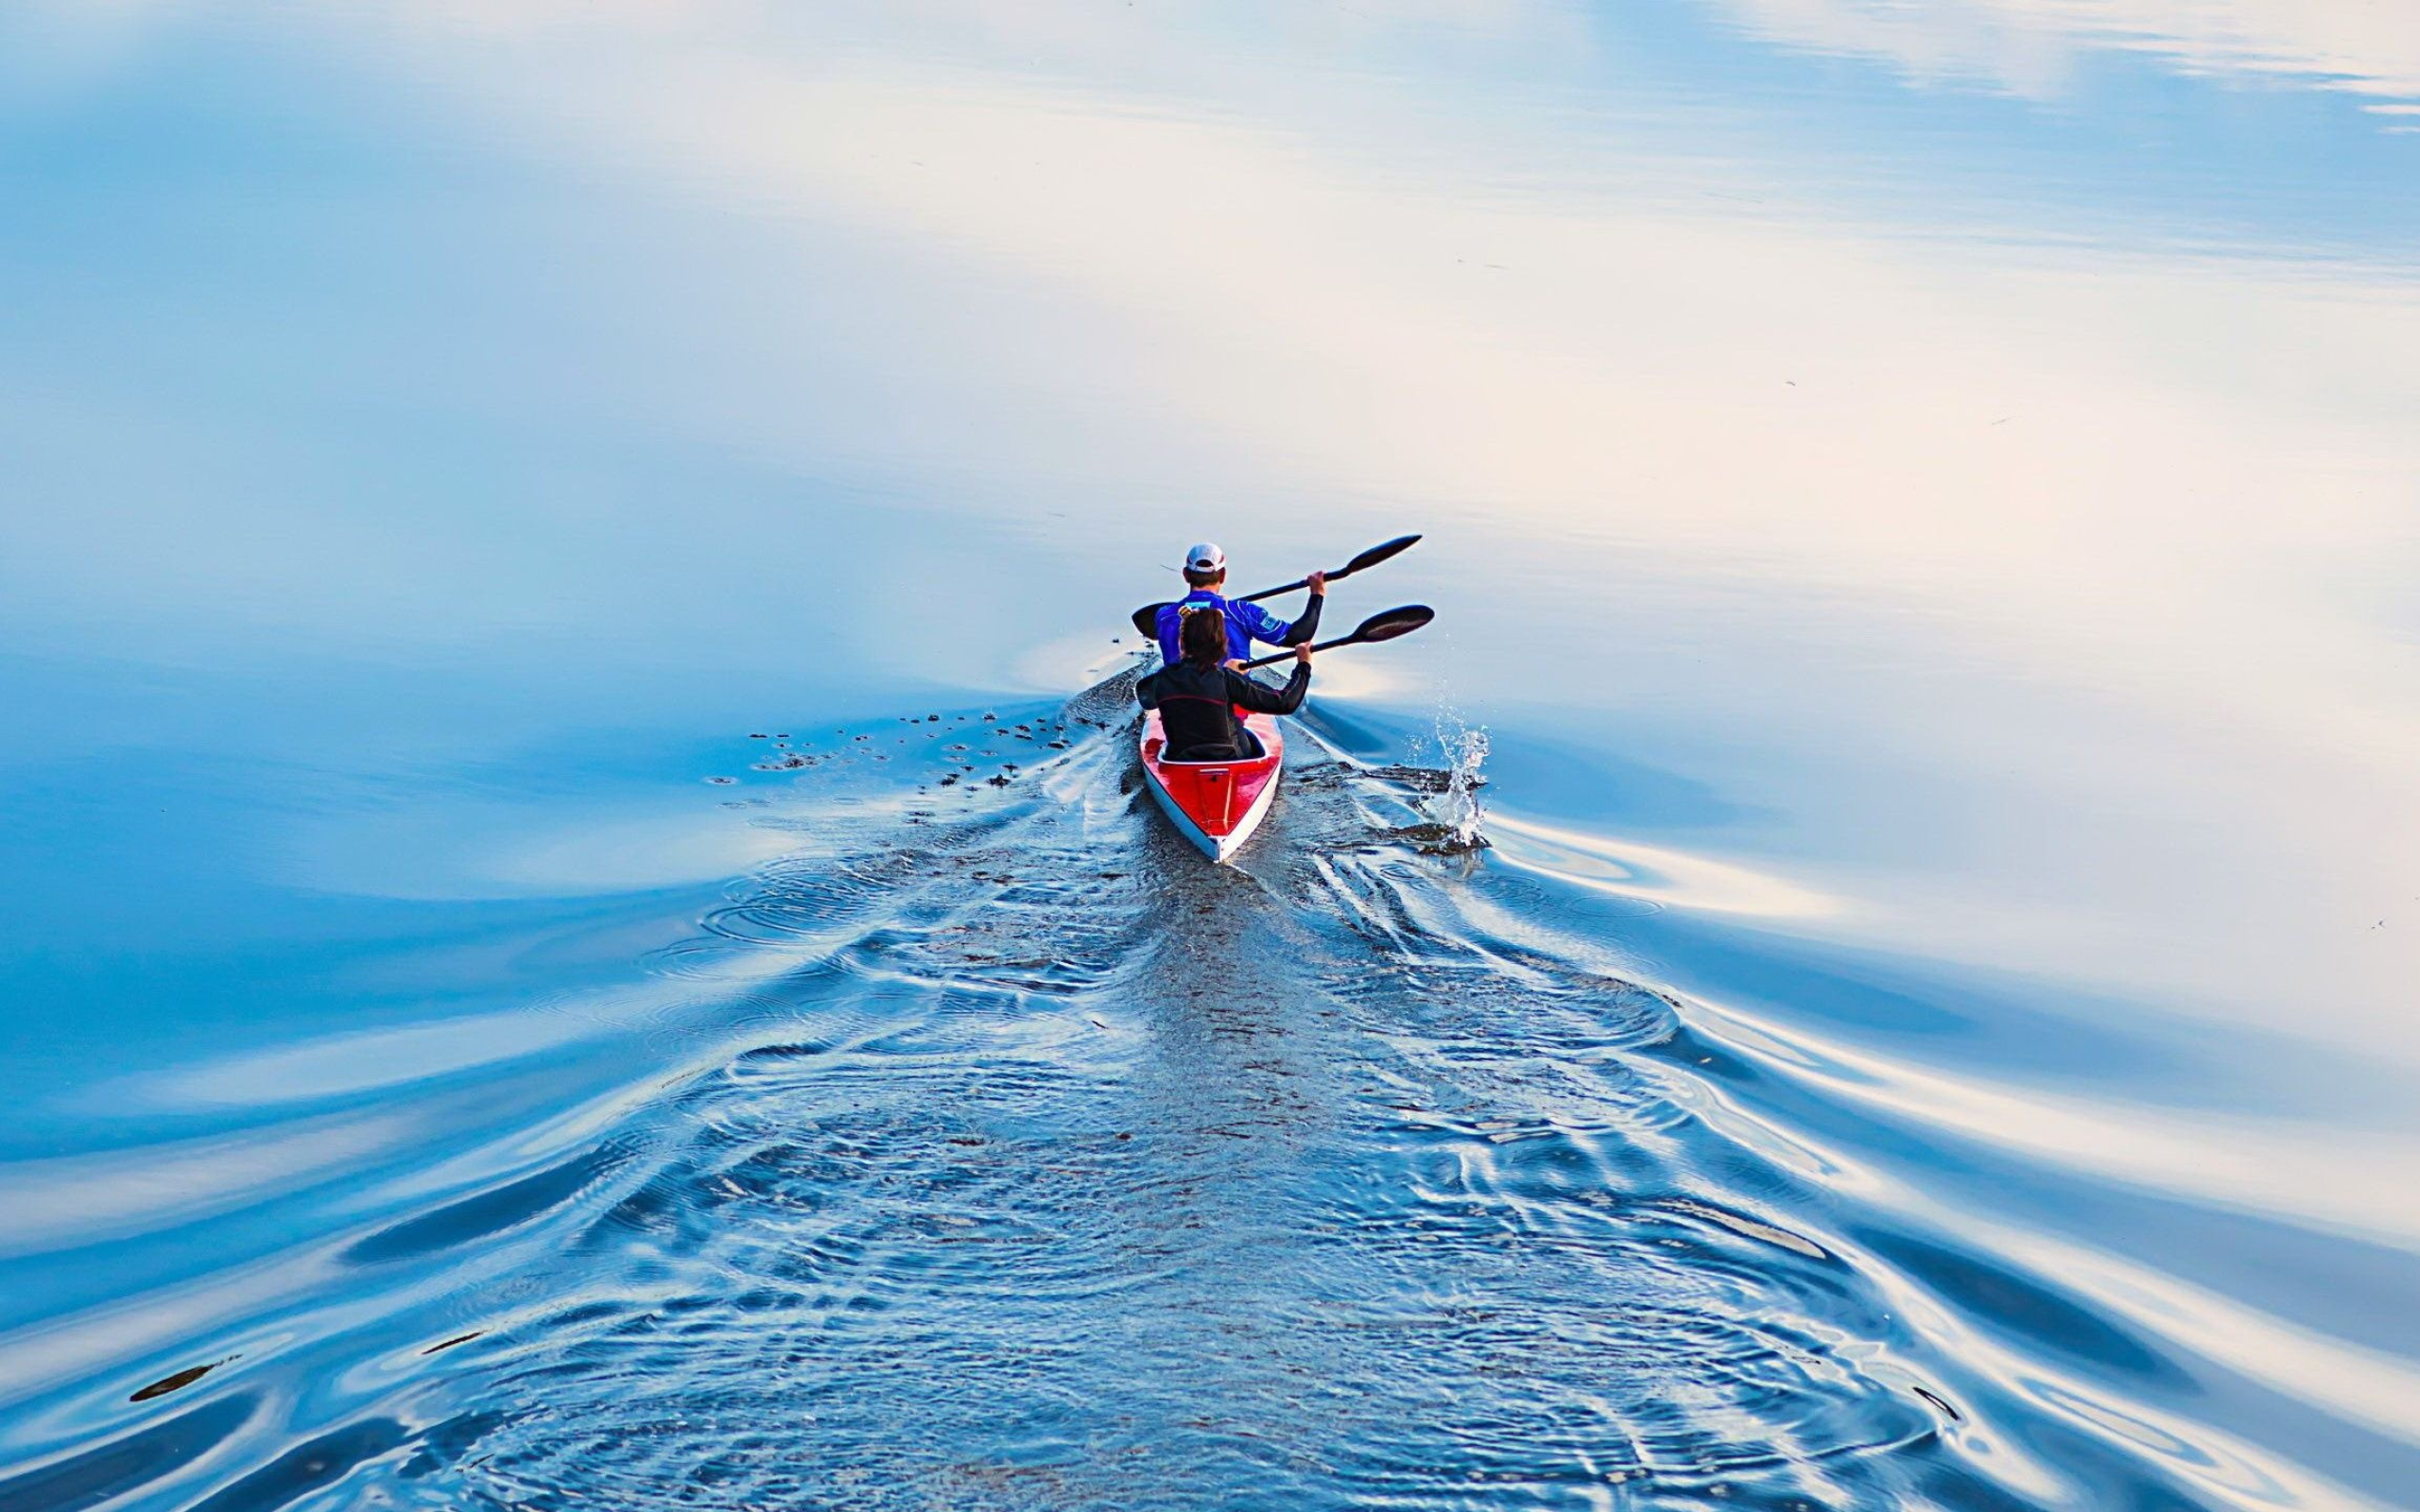 Rowing: Recreational kayaking, A water sports discipline that is popular among travelers. 2560x1600 HD Wallpaper.